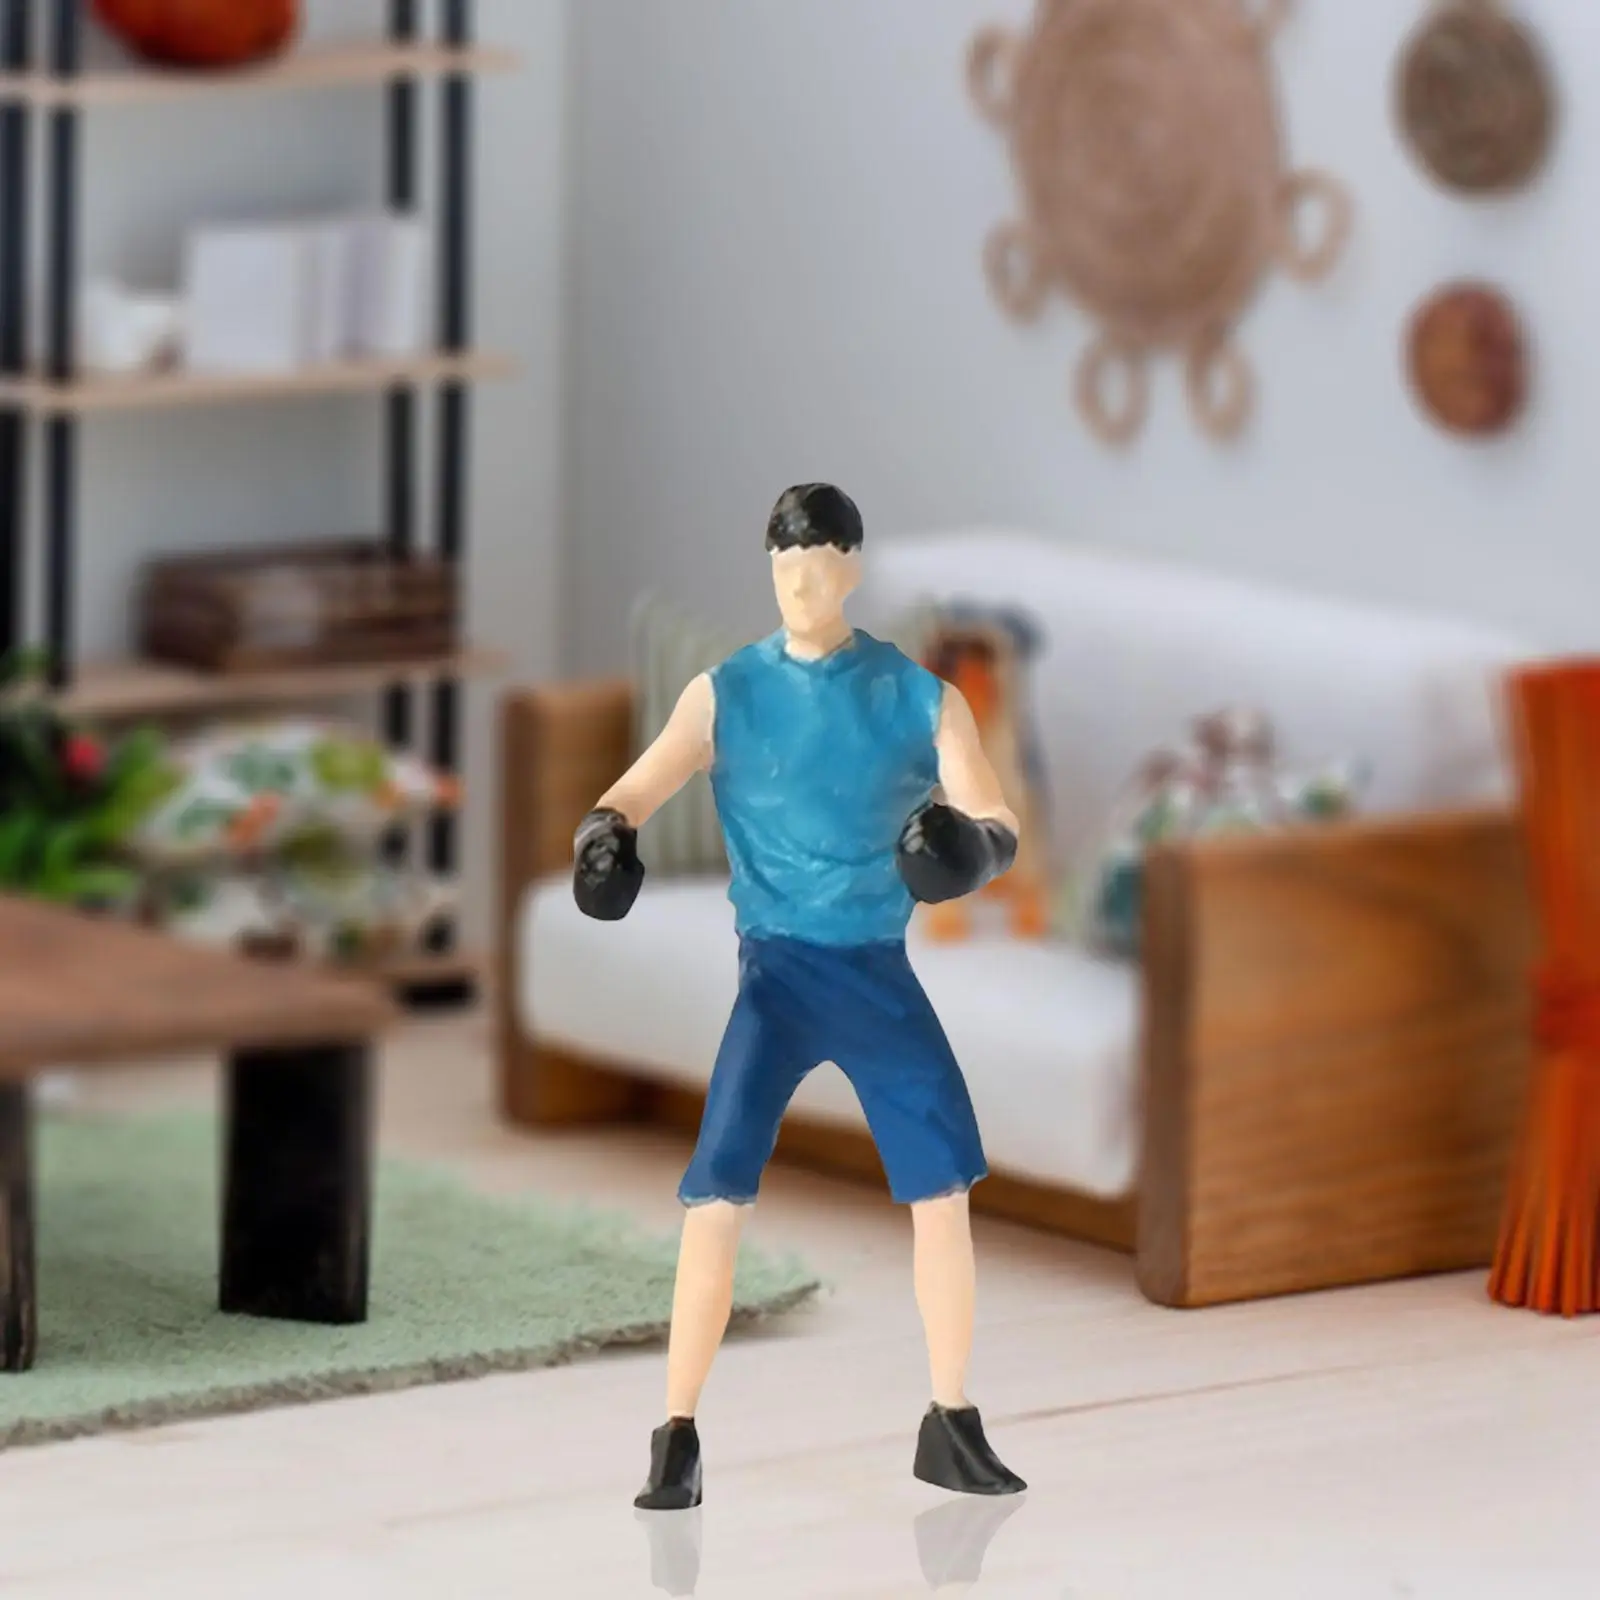 1:64 Scale Models Figurine Boxing Man Figurines Desk Decoration for Diorama